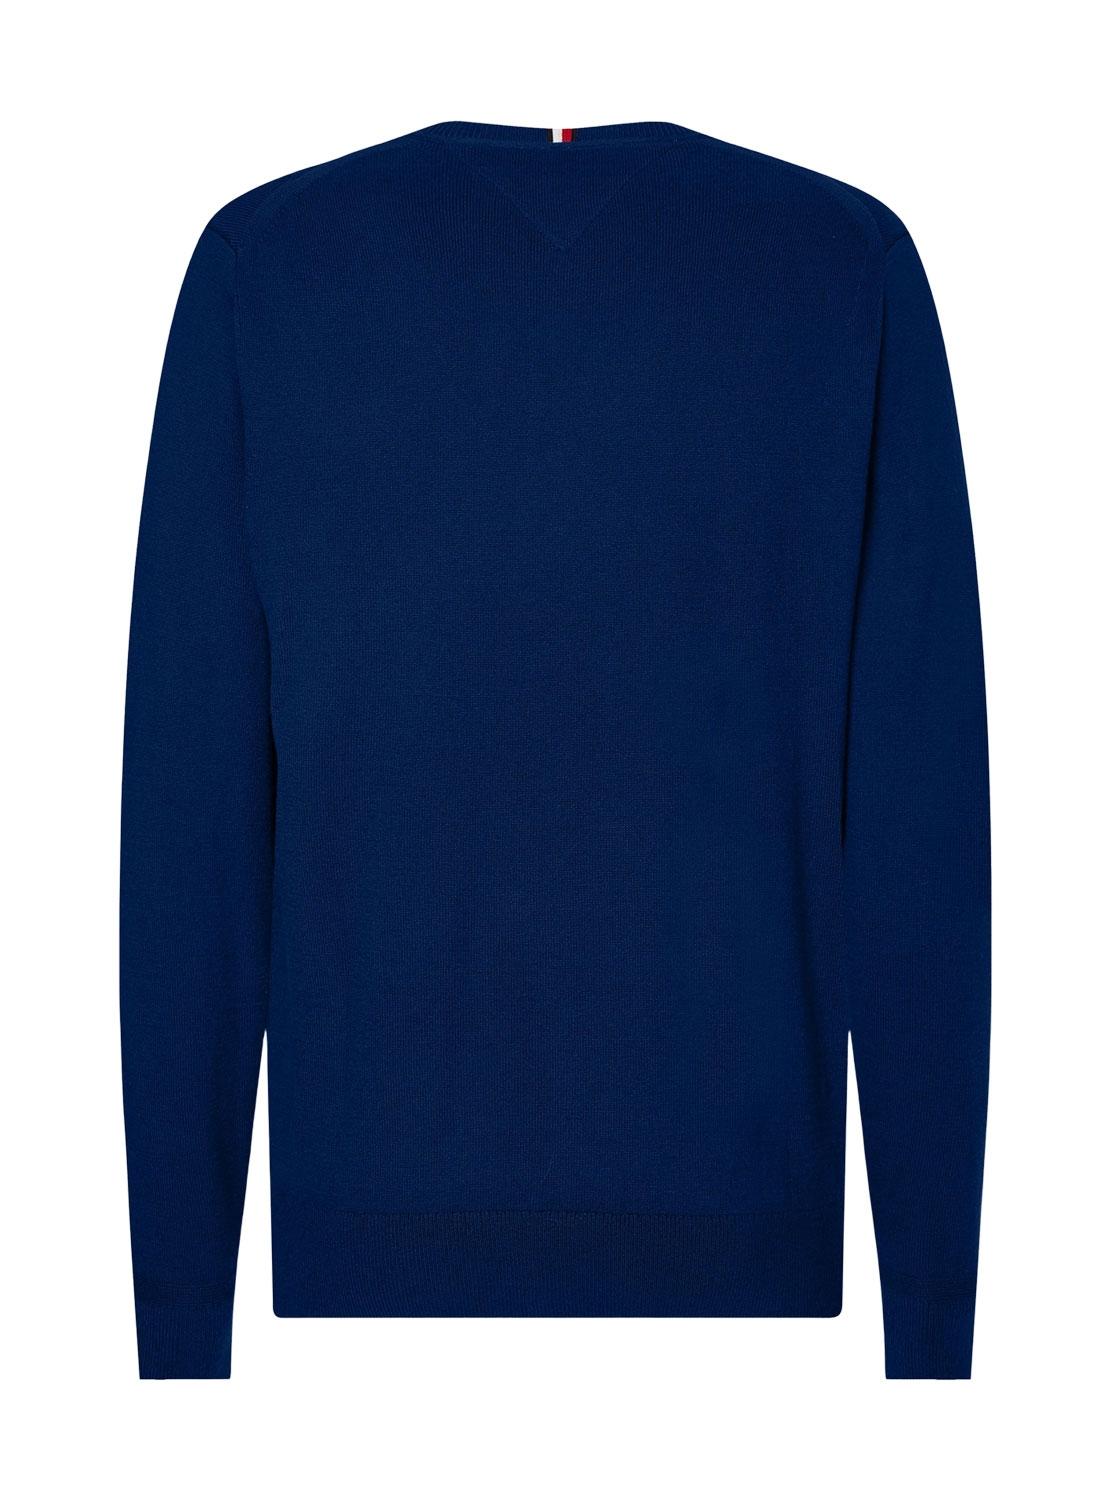 Pullover Tommy Hilfiger Basico per Uomo Blu Navy